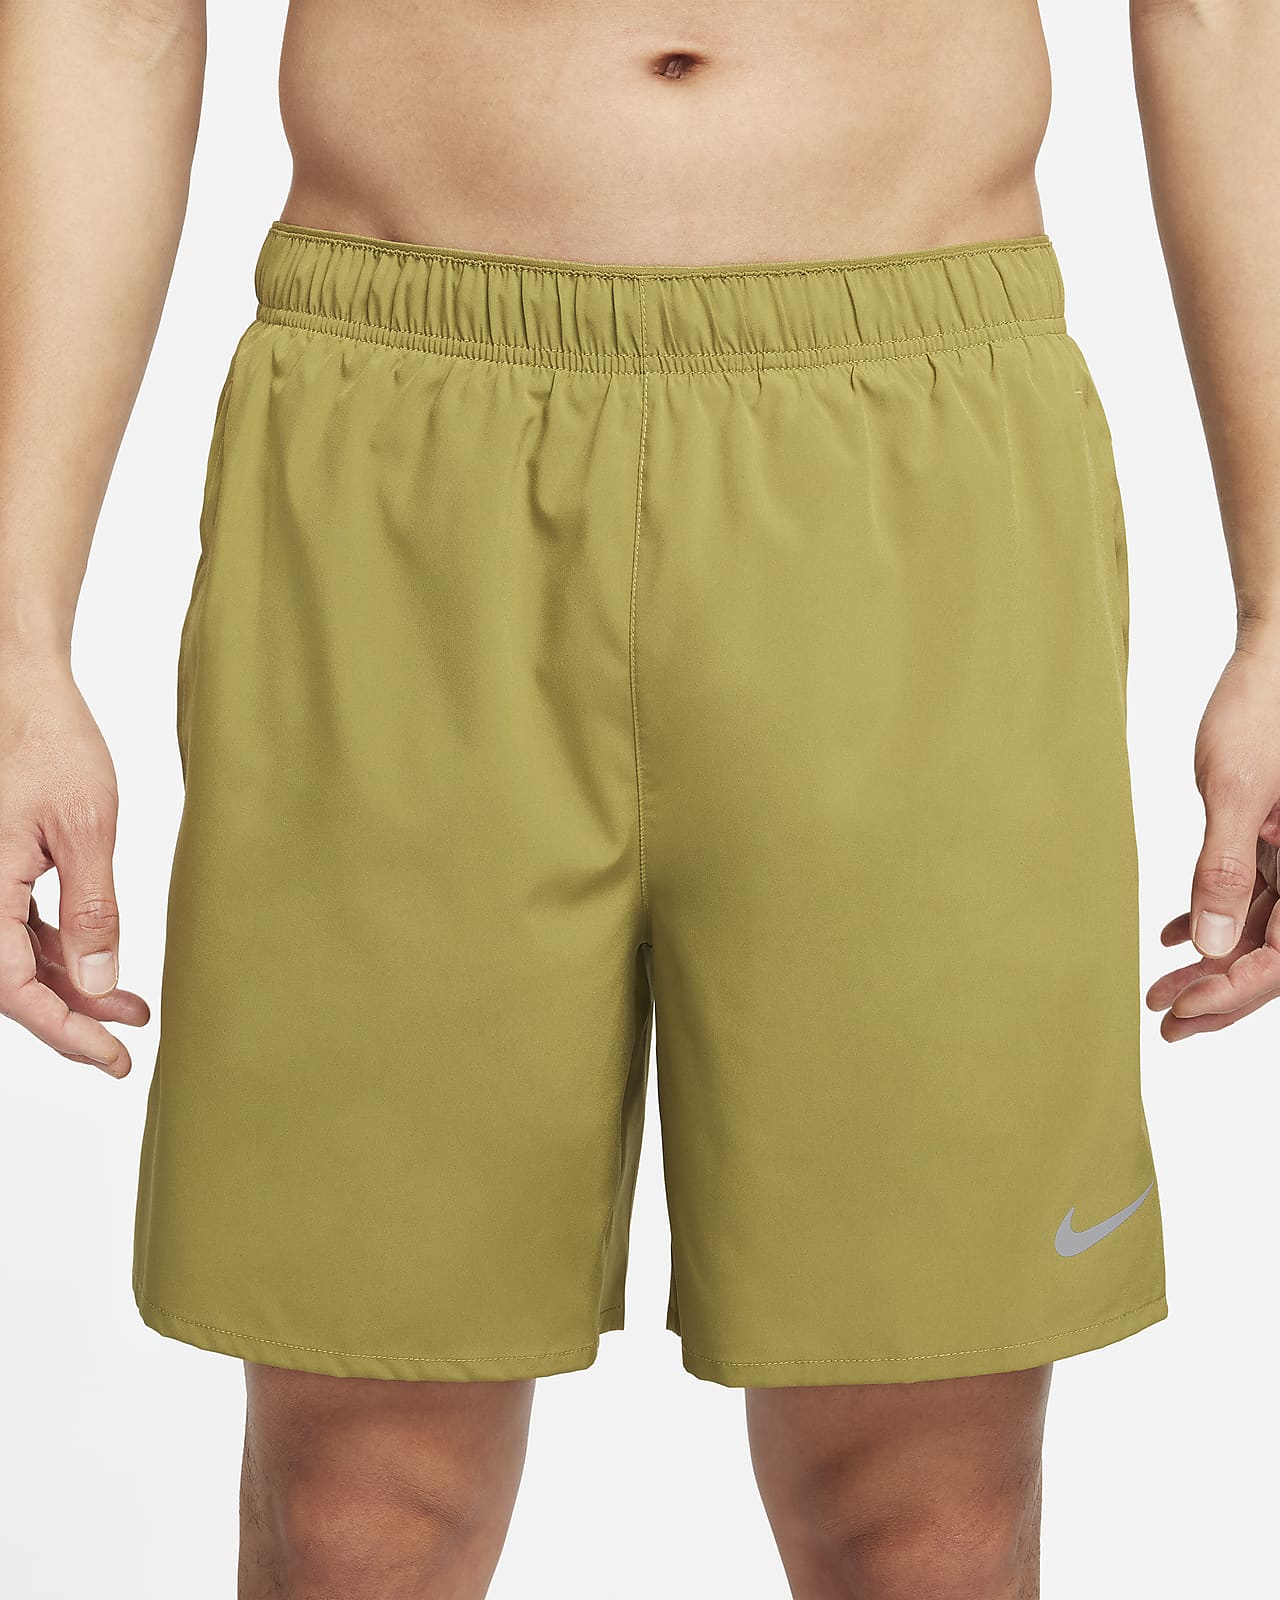 Nike Trail Second Sunrise Men's Dri-FIT 7 Brief-Lined Running Shorts (as1,  Alpha, m, Regular, Regular, Black/Dark Smoke Grey/White) at  Men's  Clothing store